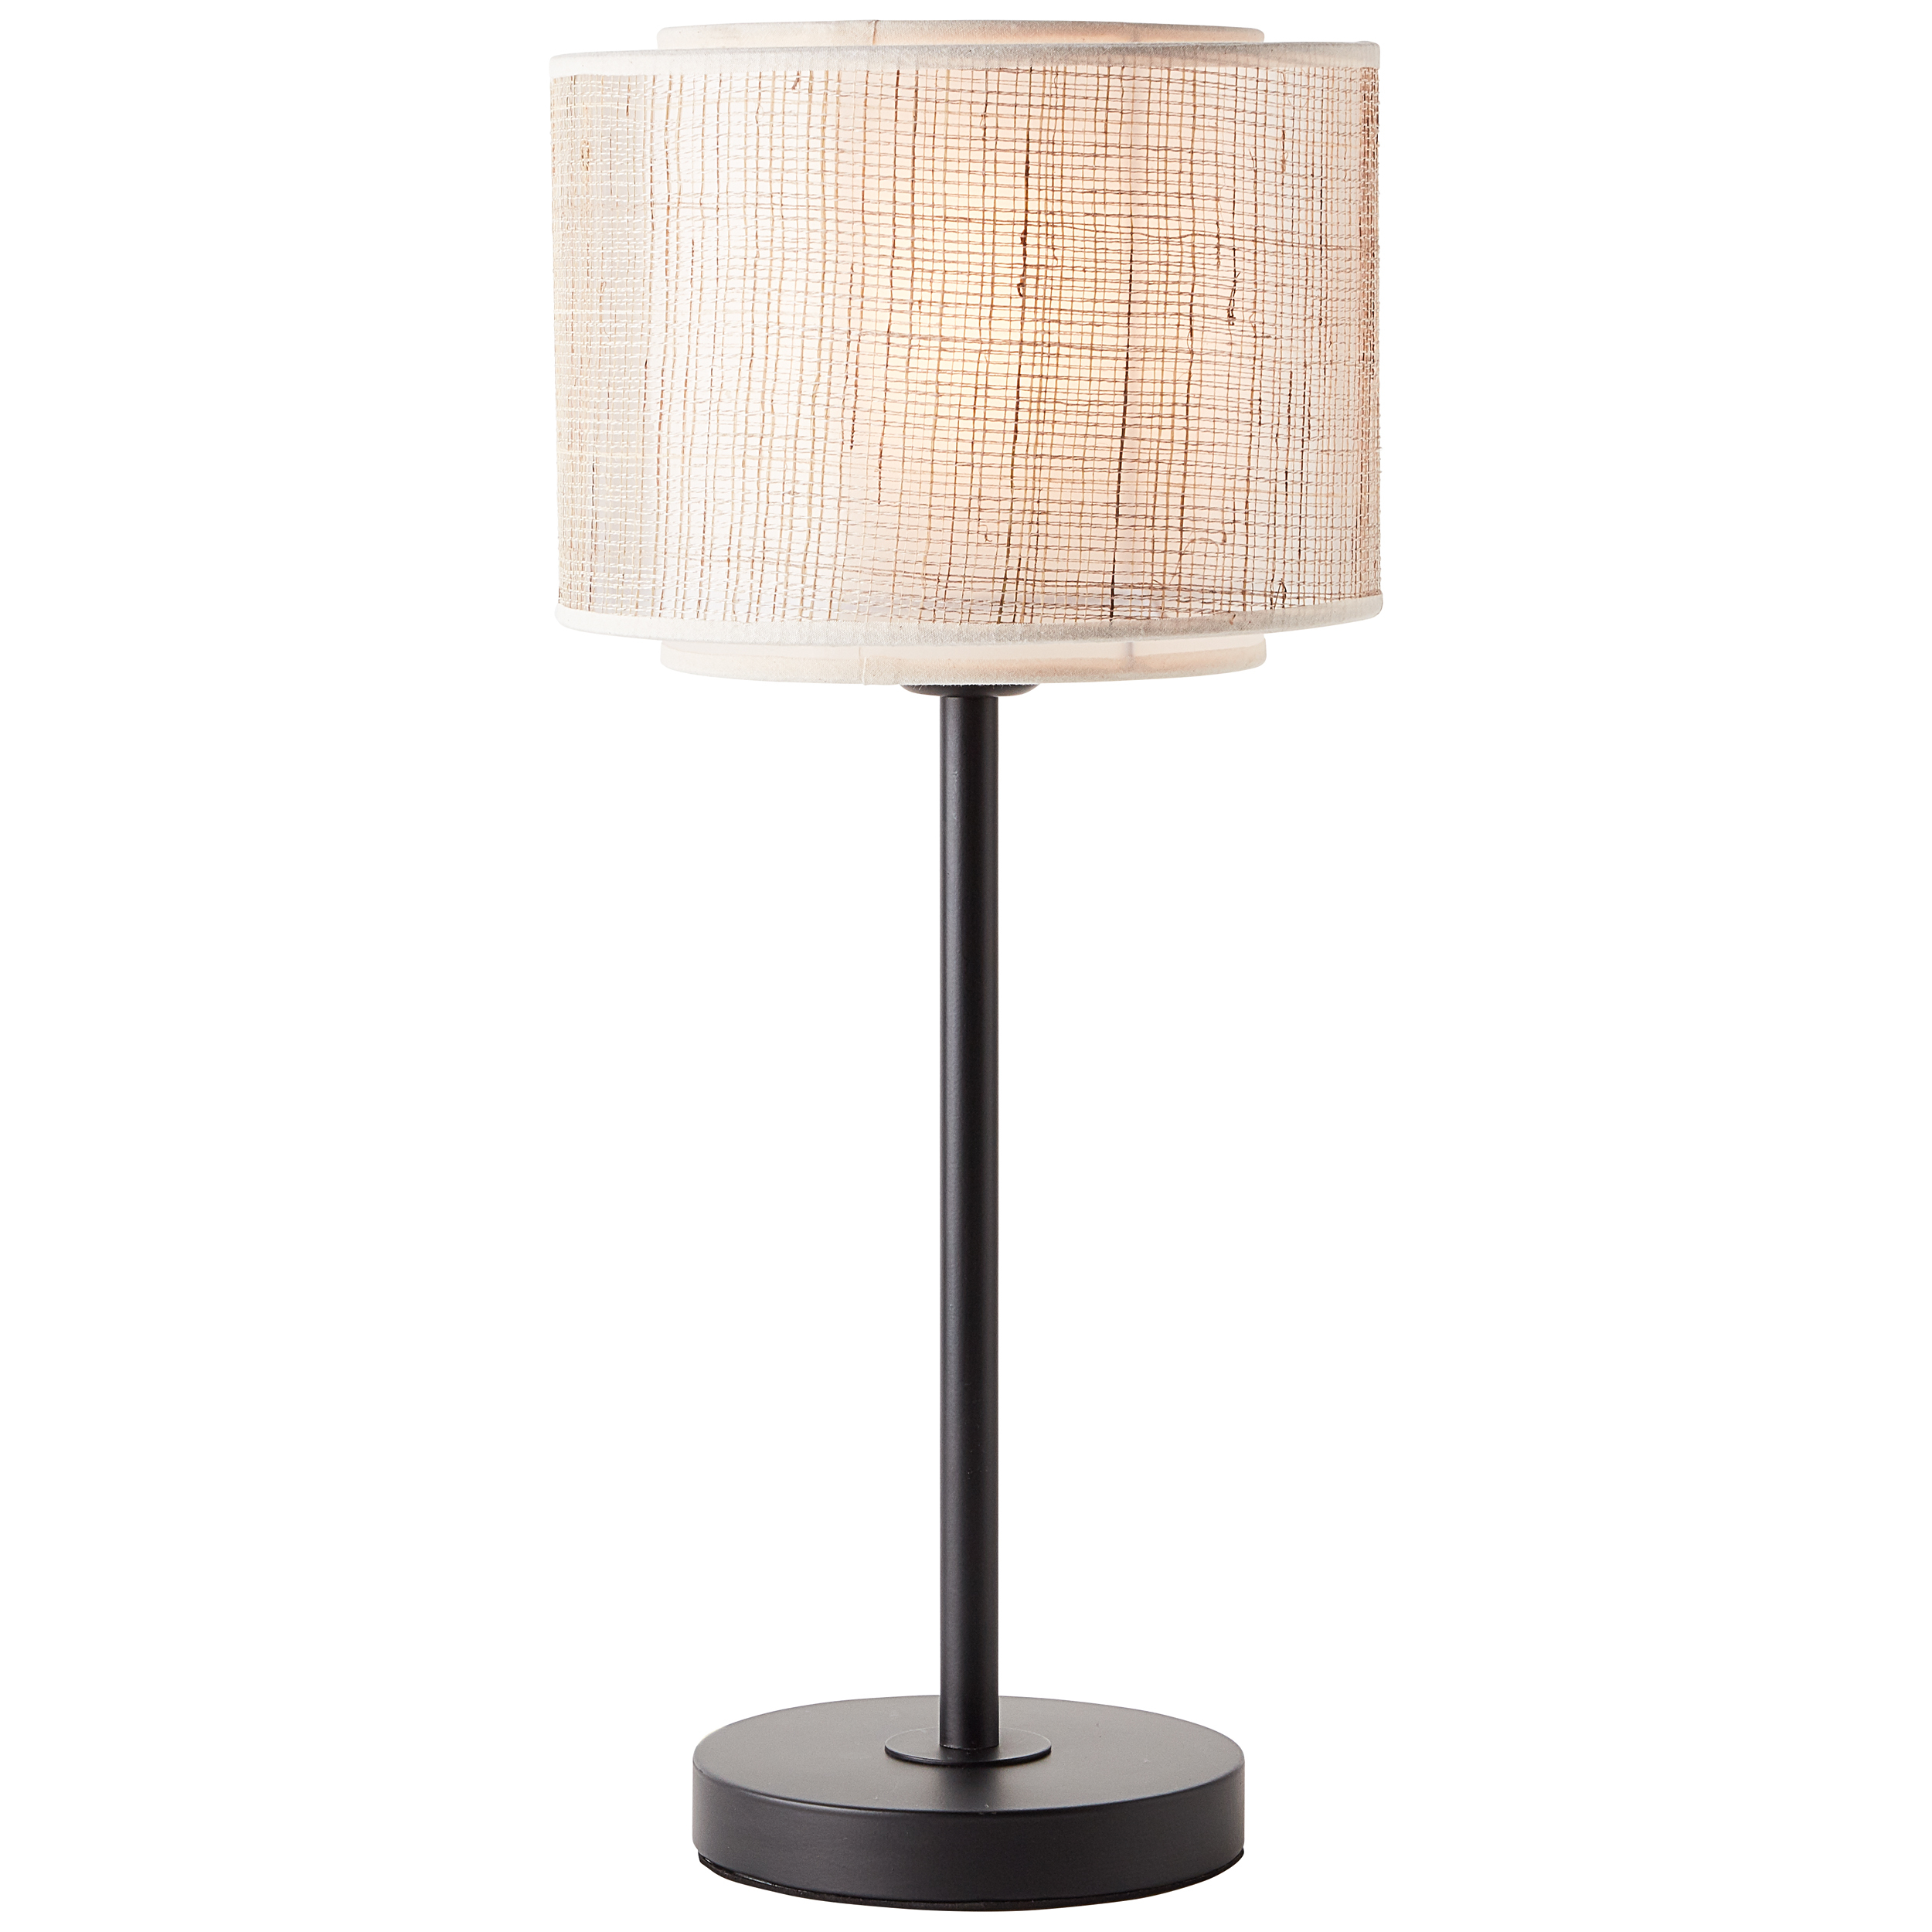 Decorative Table Lamps